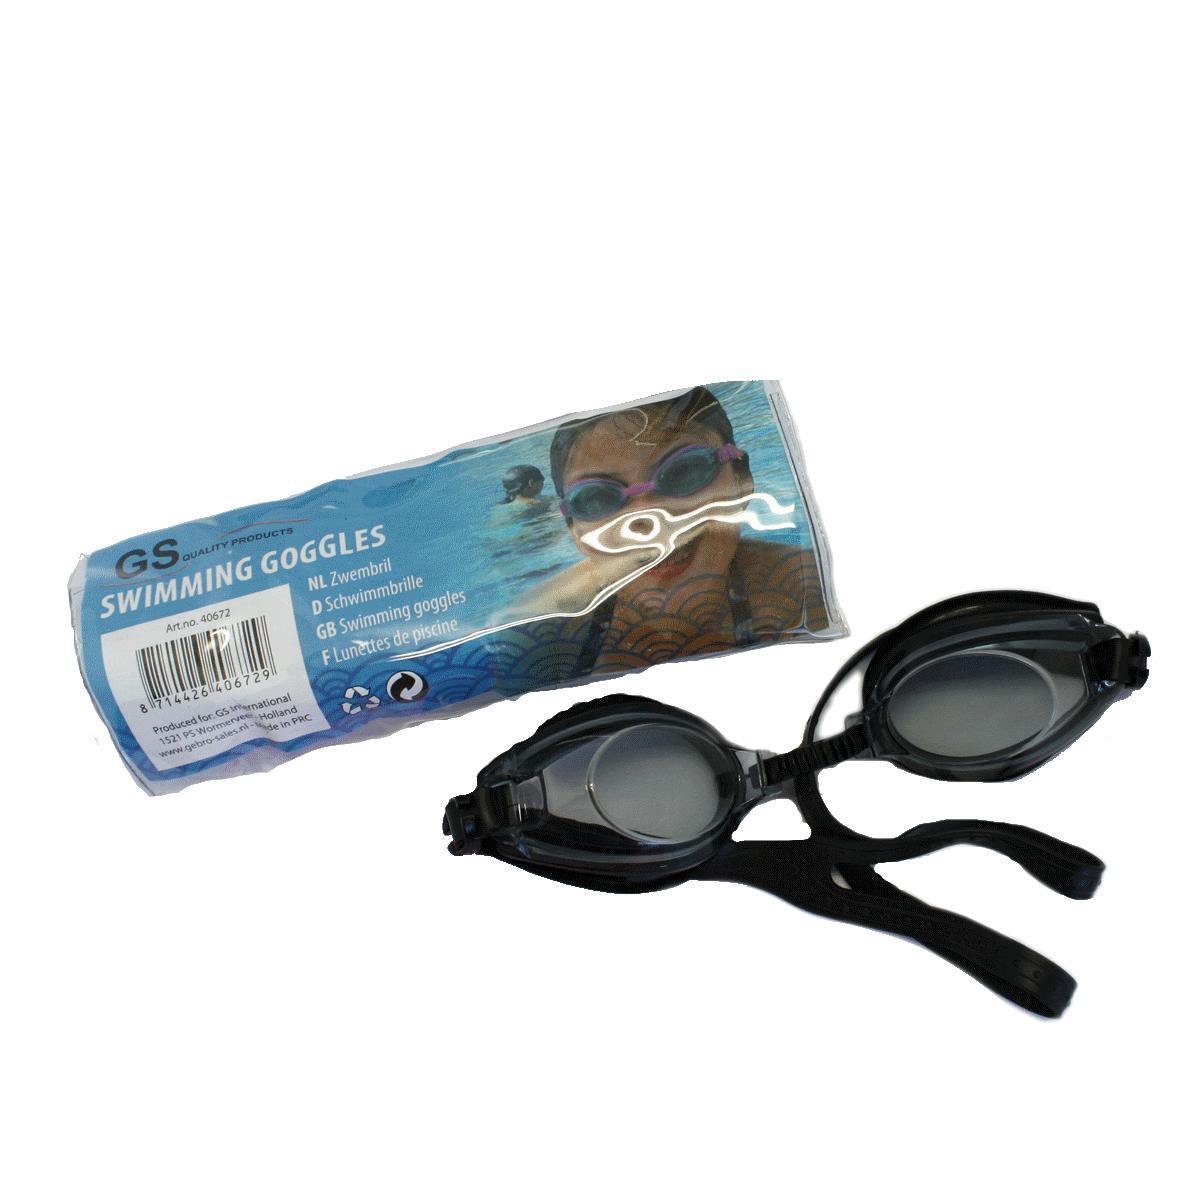 Gewond raken Harnas Voorouder Zwembril / duikbril - ZWART | bol.com